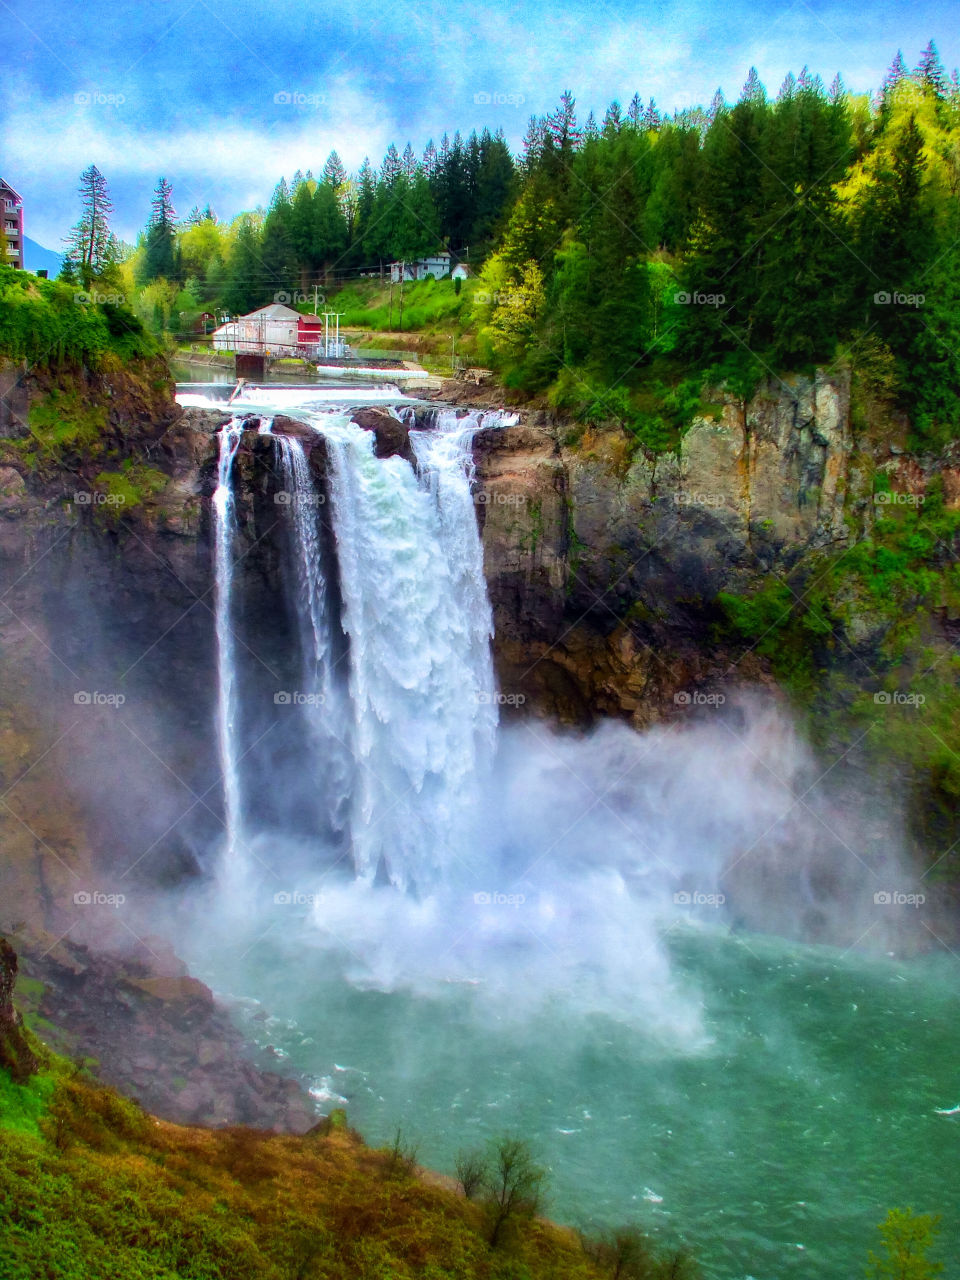 Beautiful waterfalls 😍